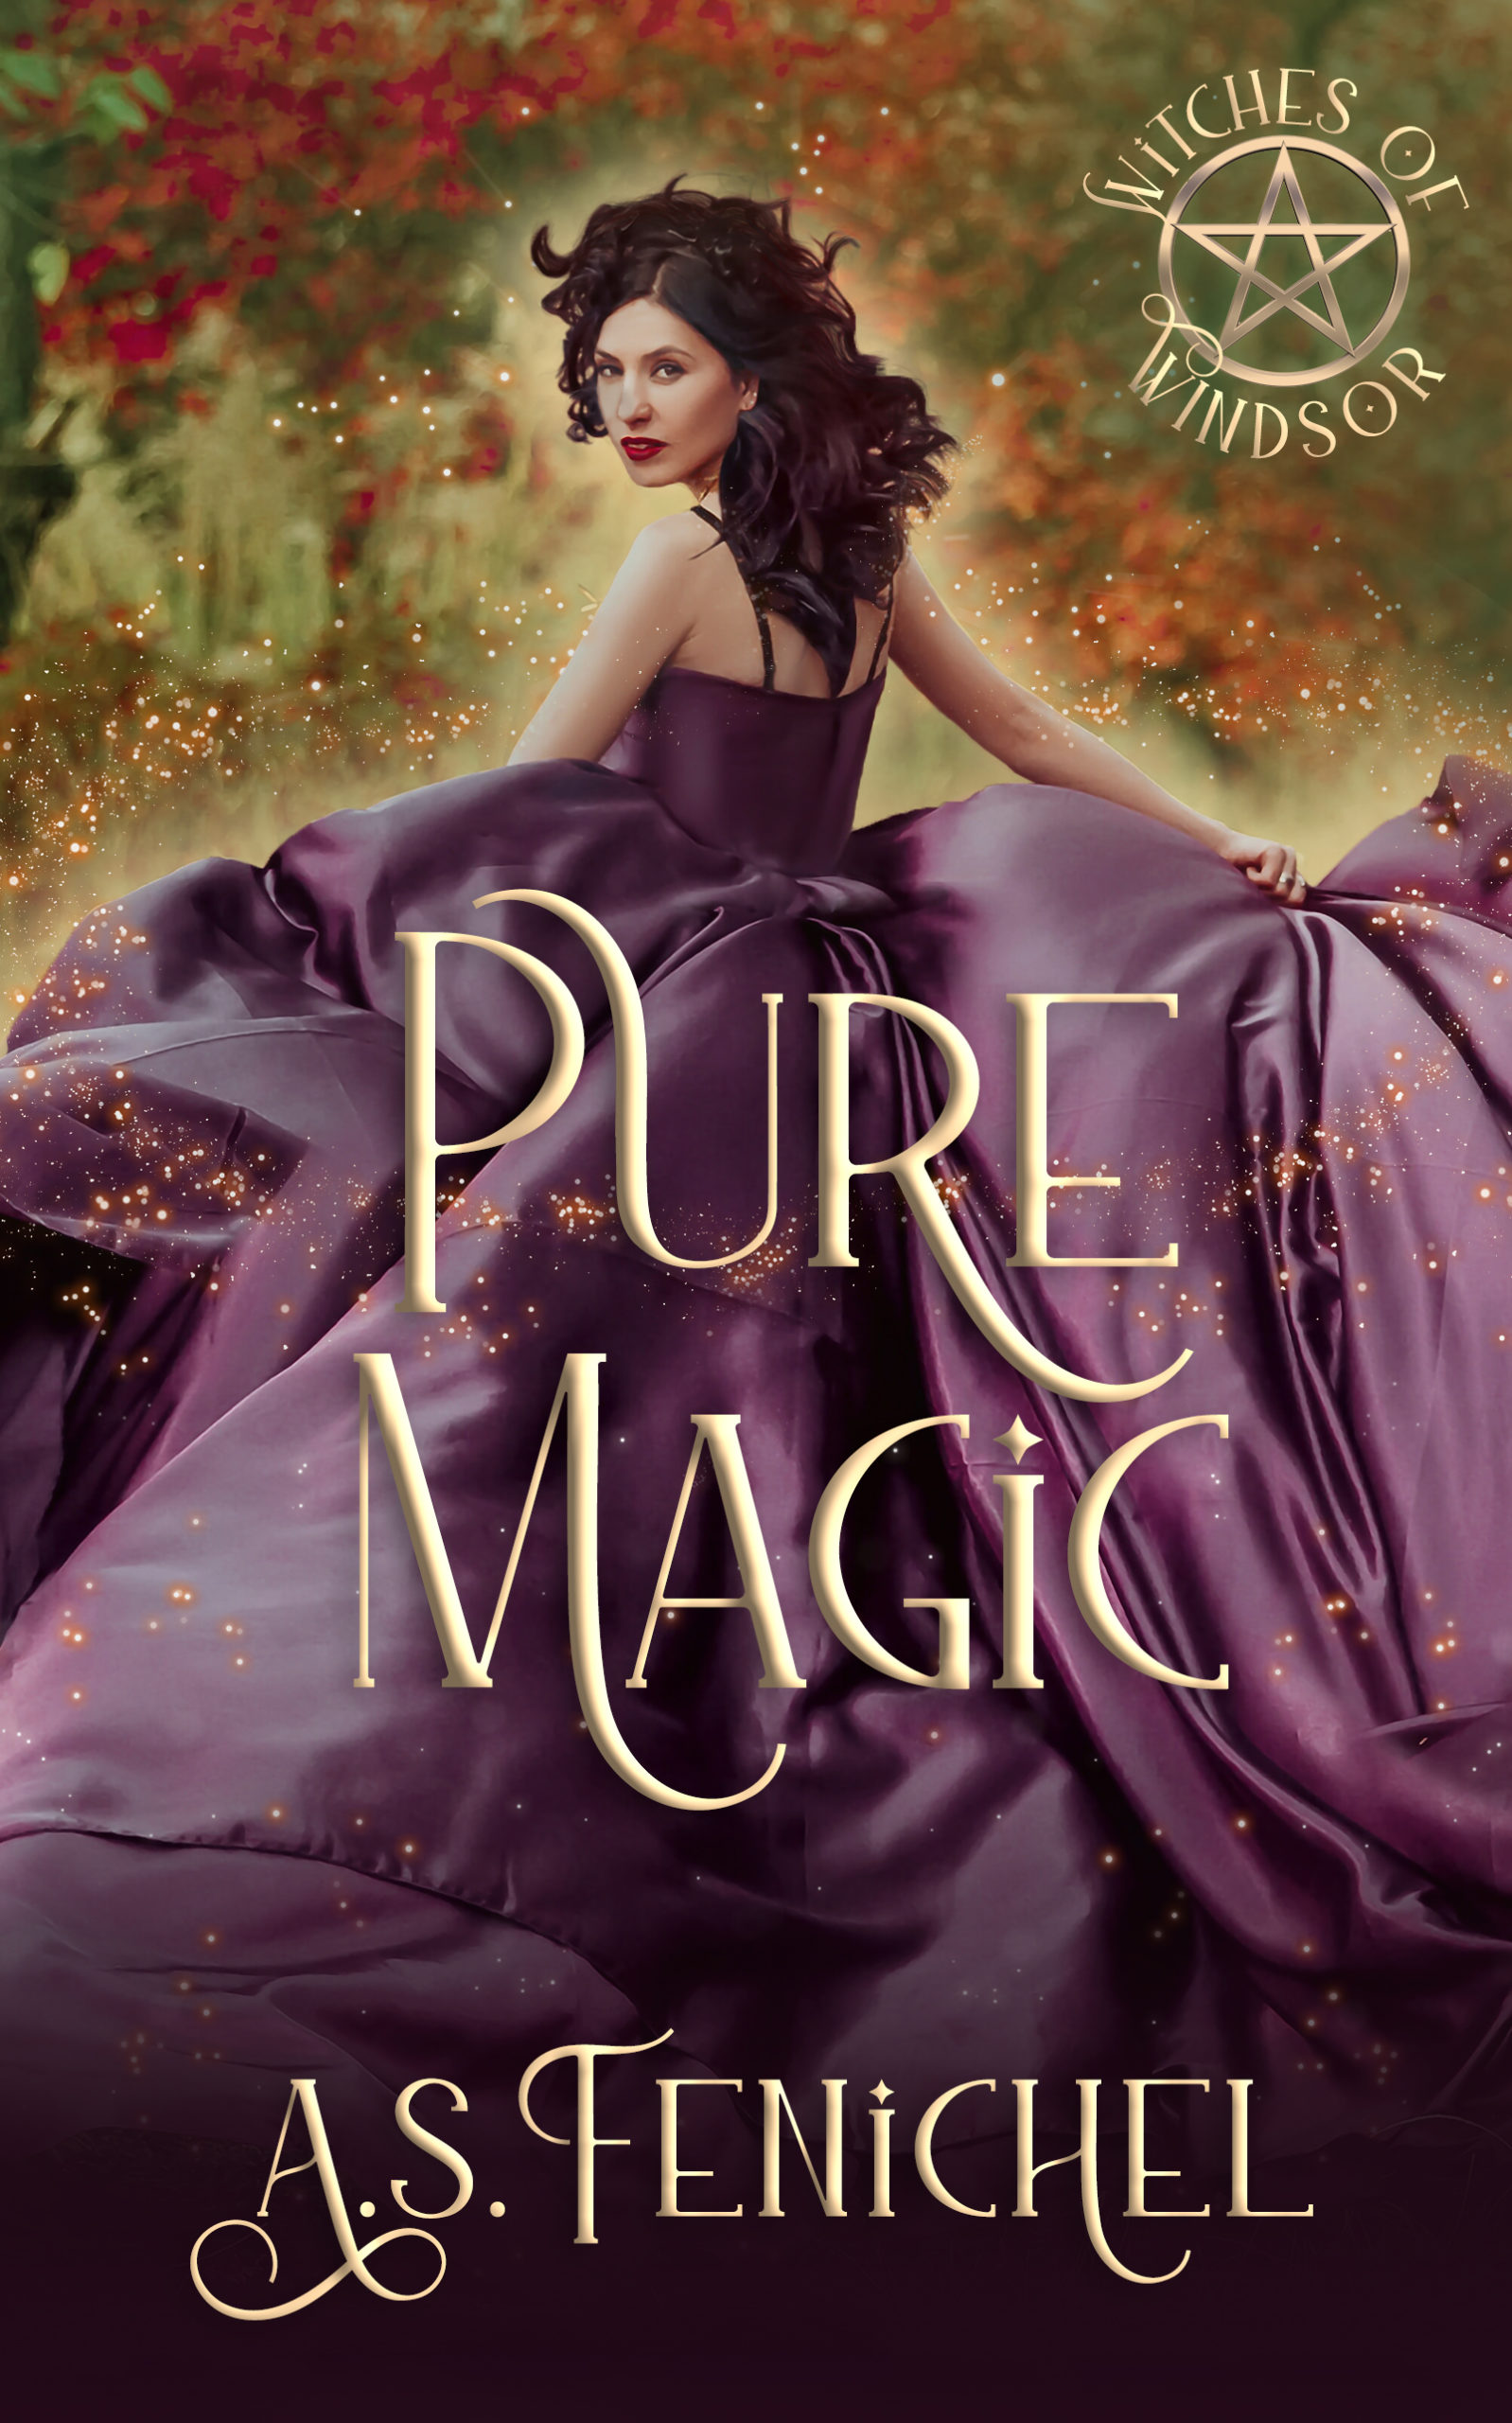 Pure Magic by A.S. Fenichel book cover